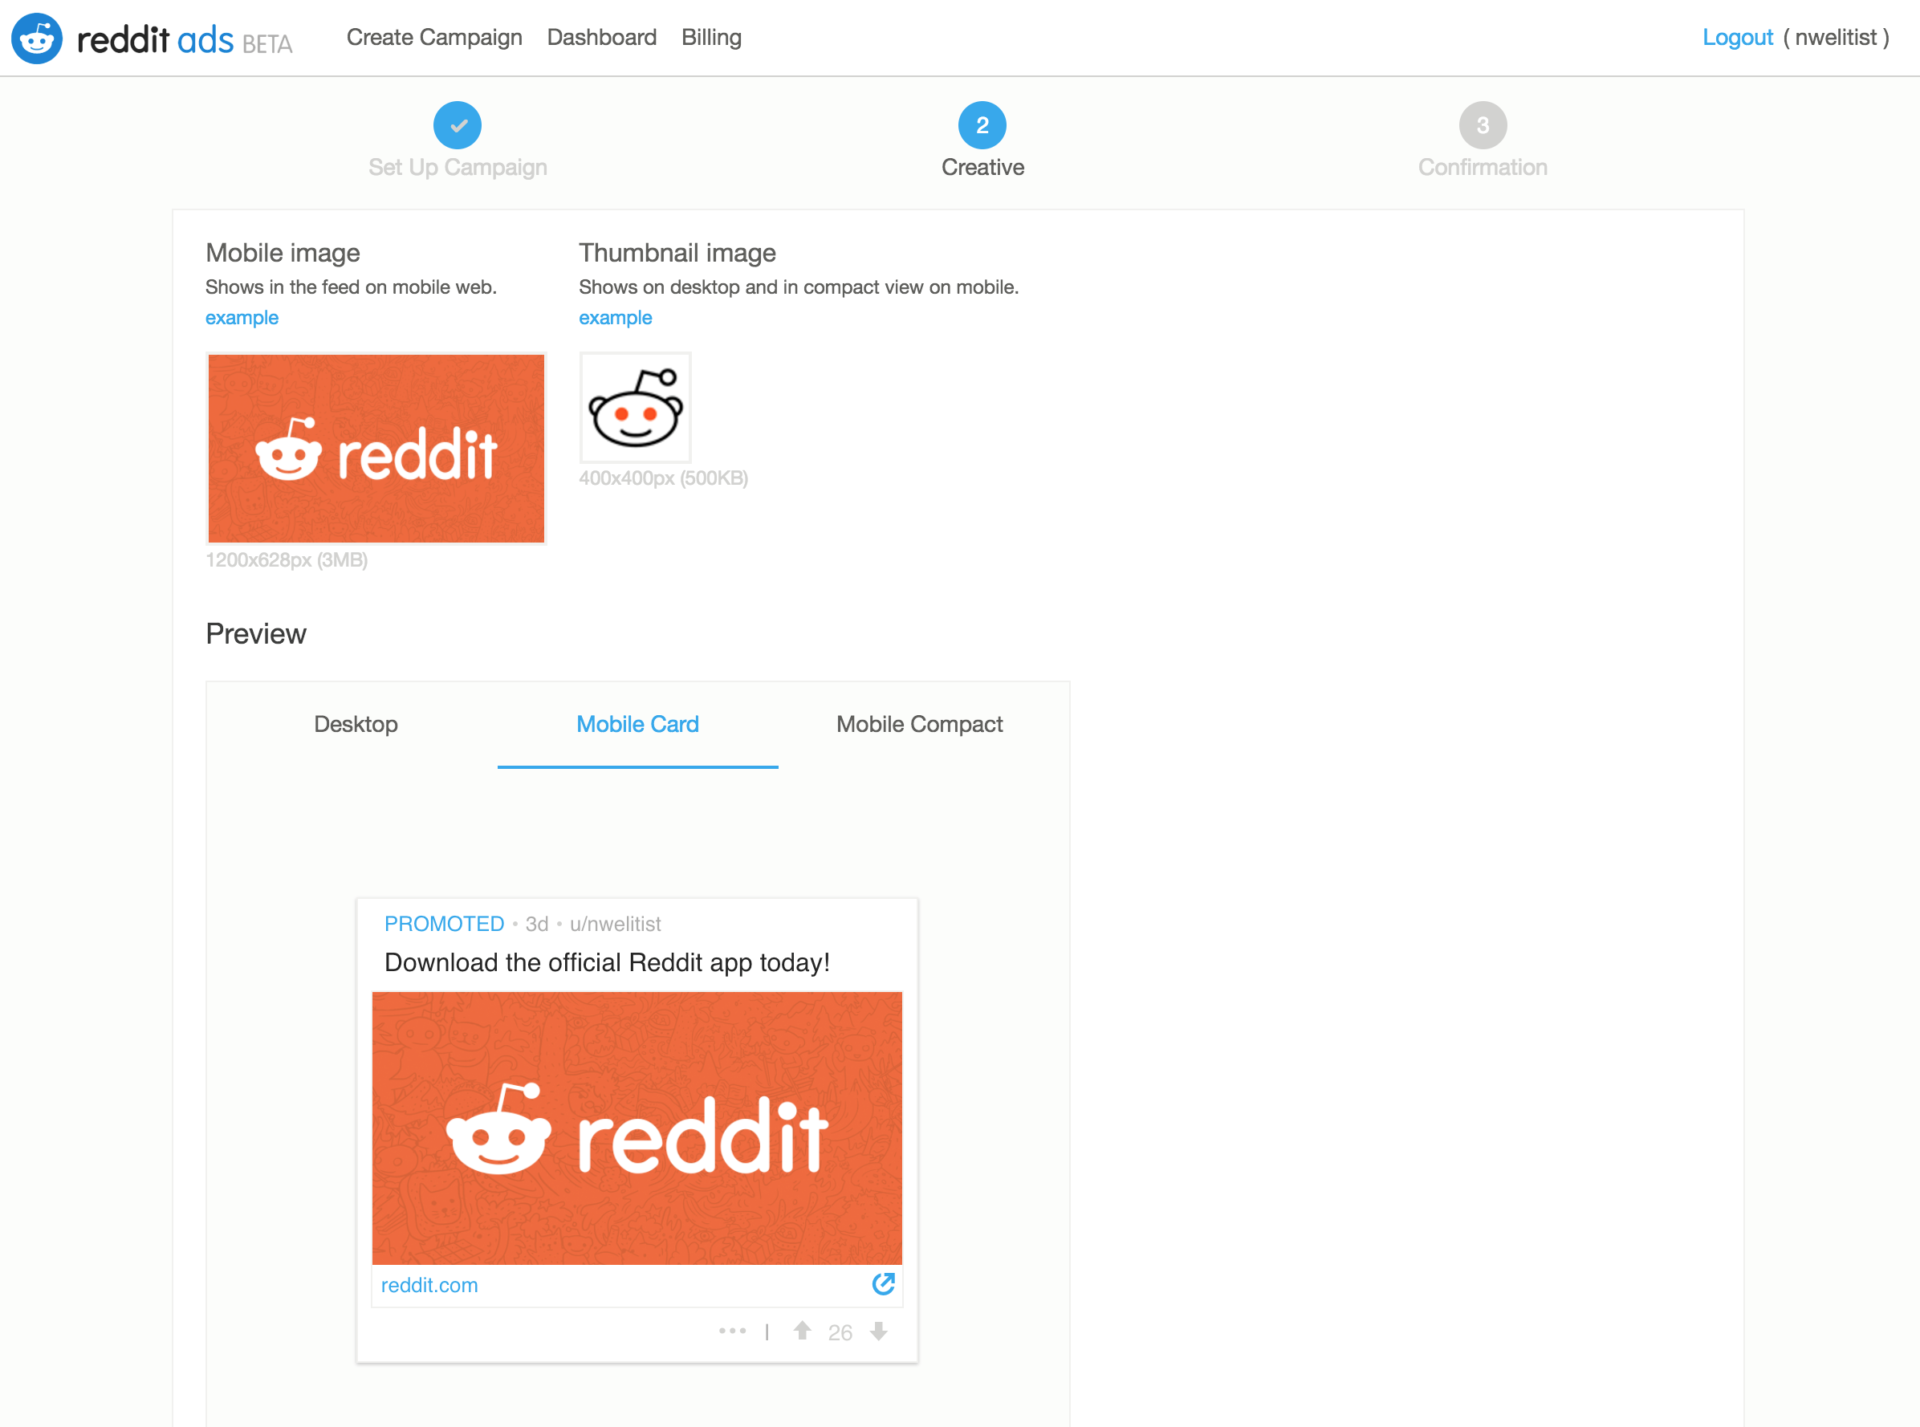 Reddit launches a new self-serve ad platform